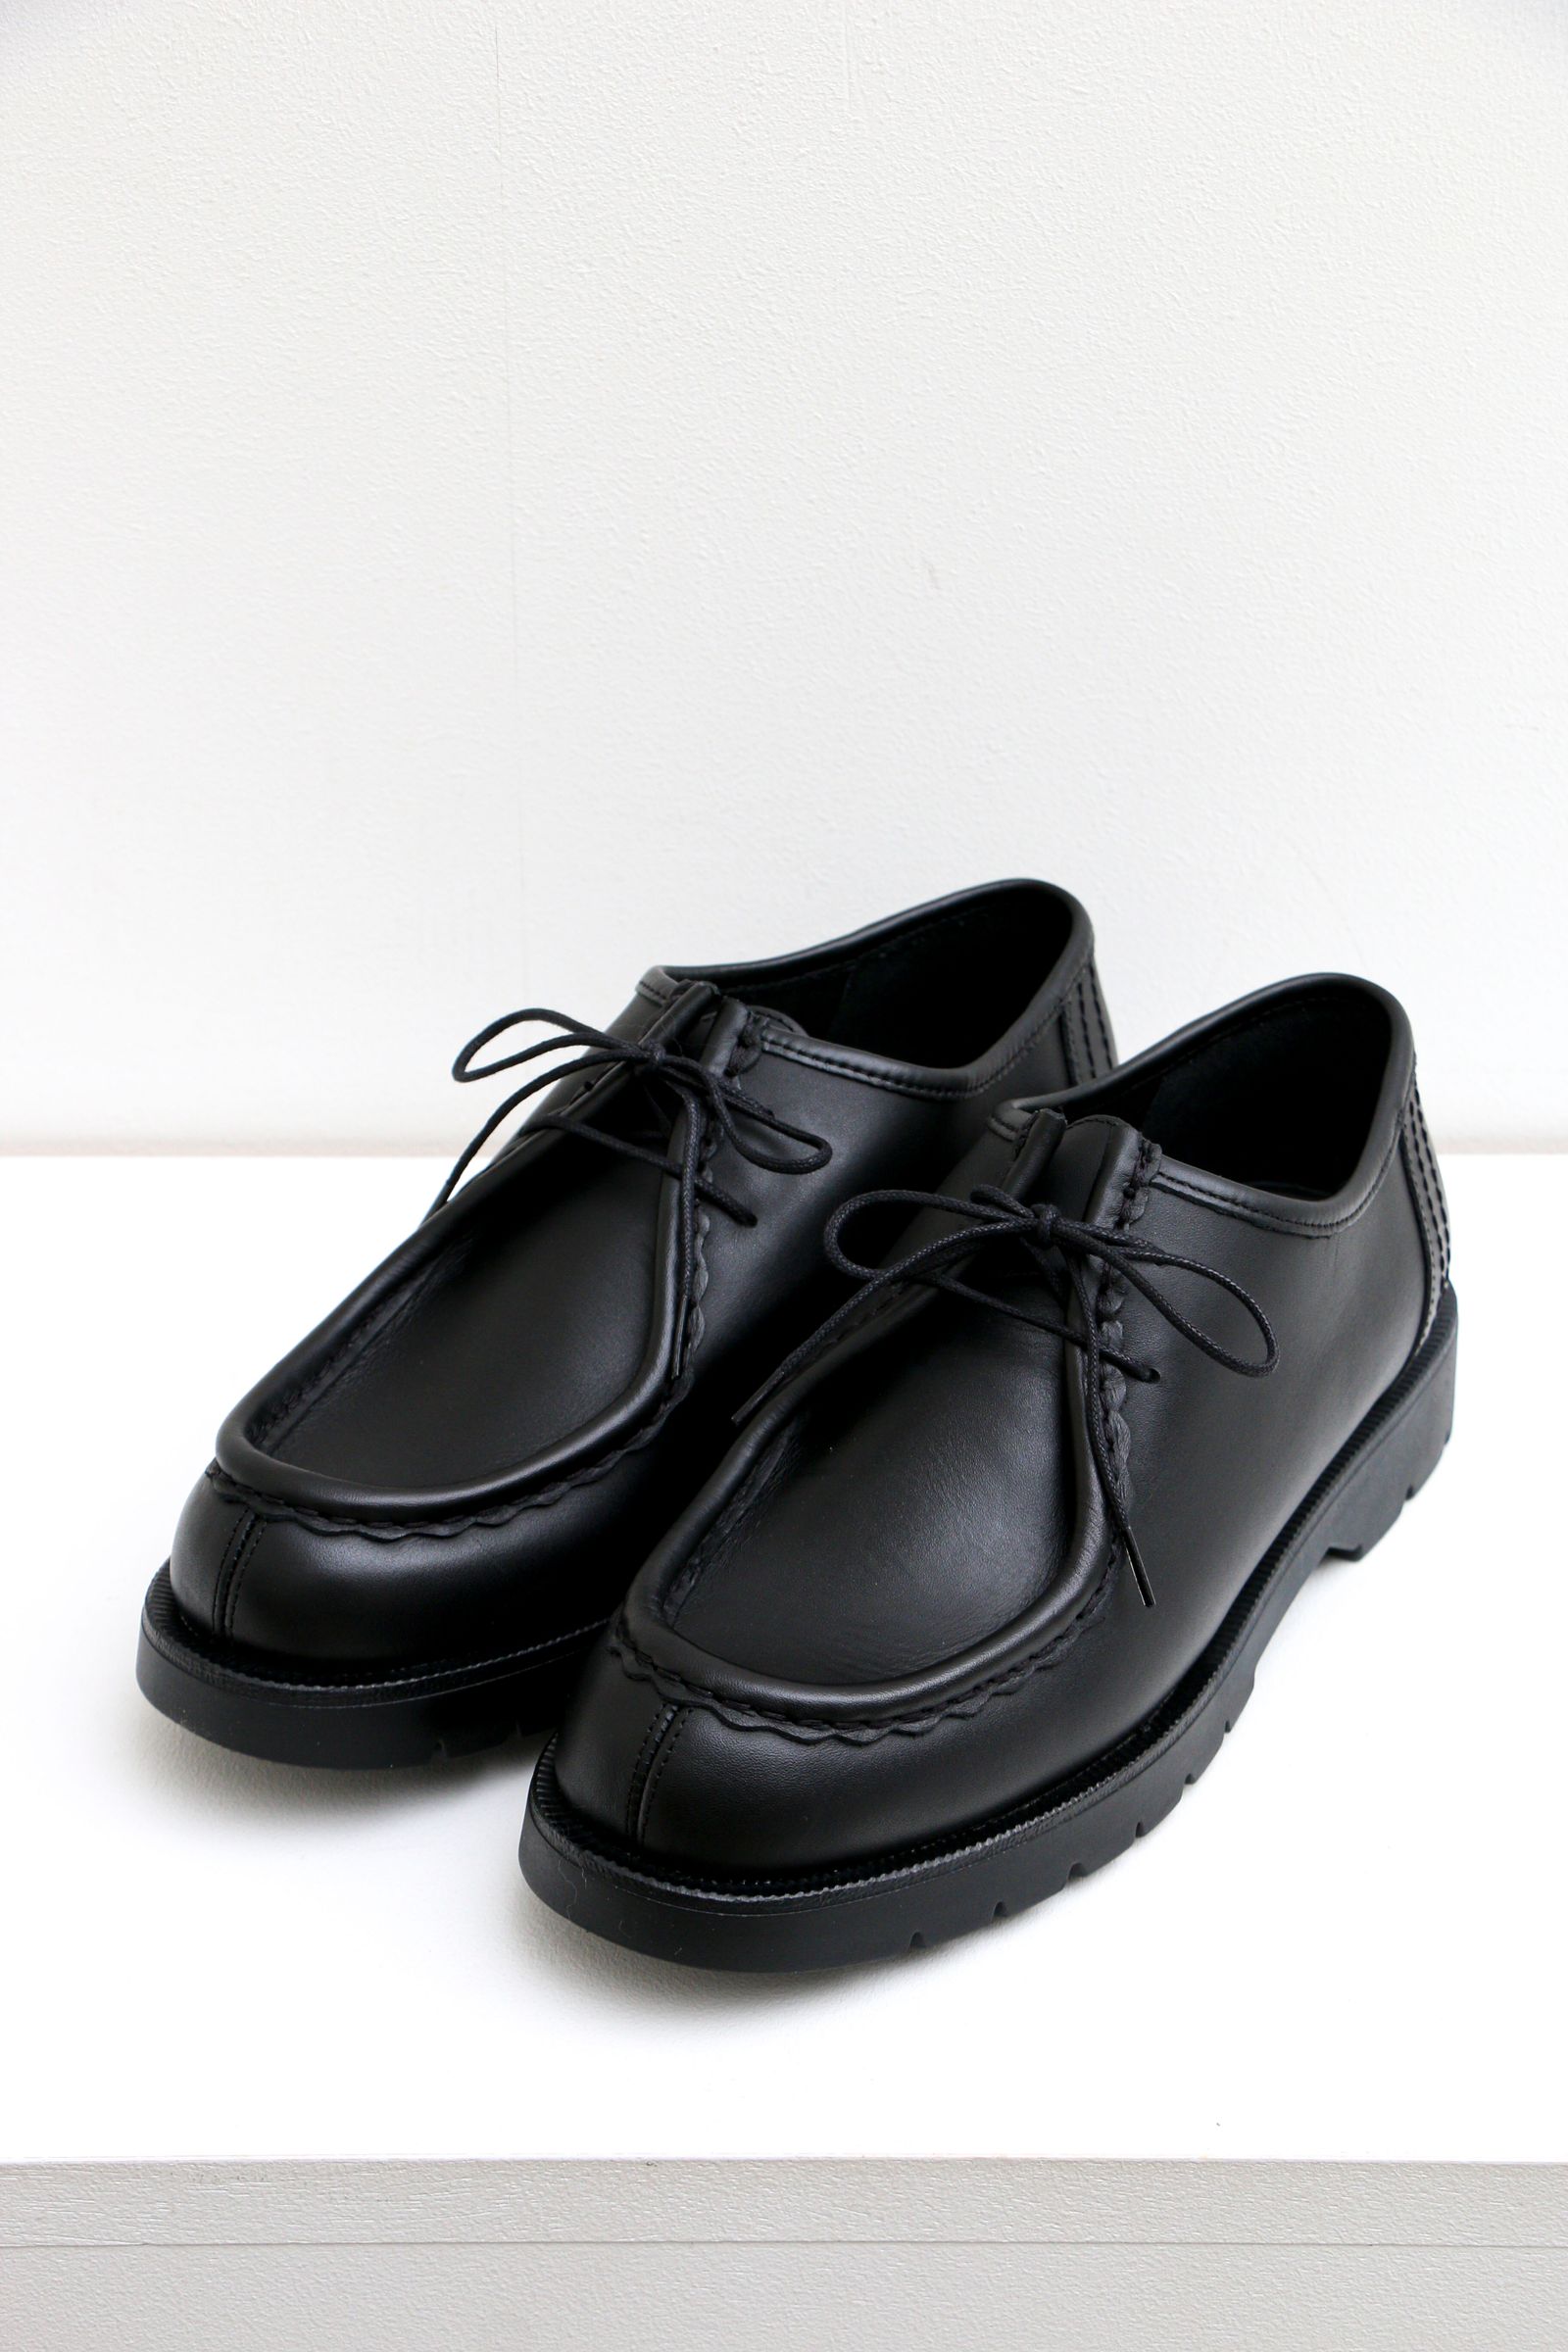 KLEMAN - KLEMAN PADROR Black / 革靴 / チロリアンシューズ / メンズ